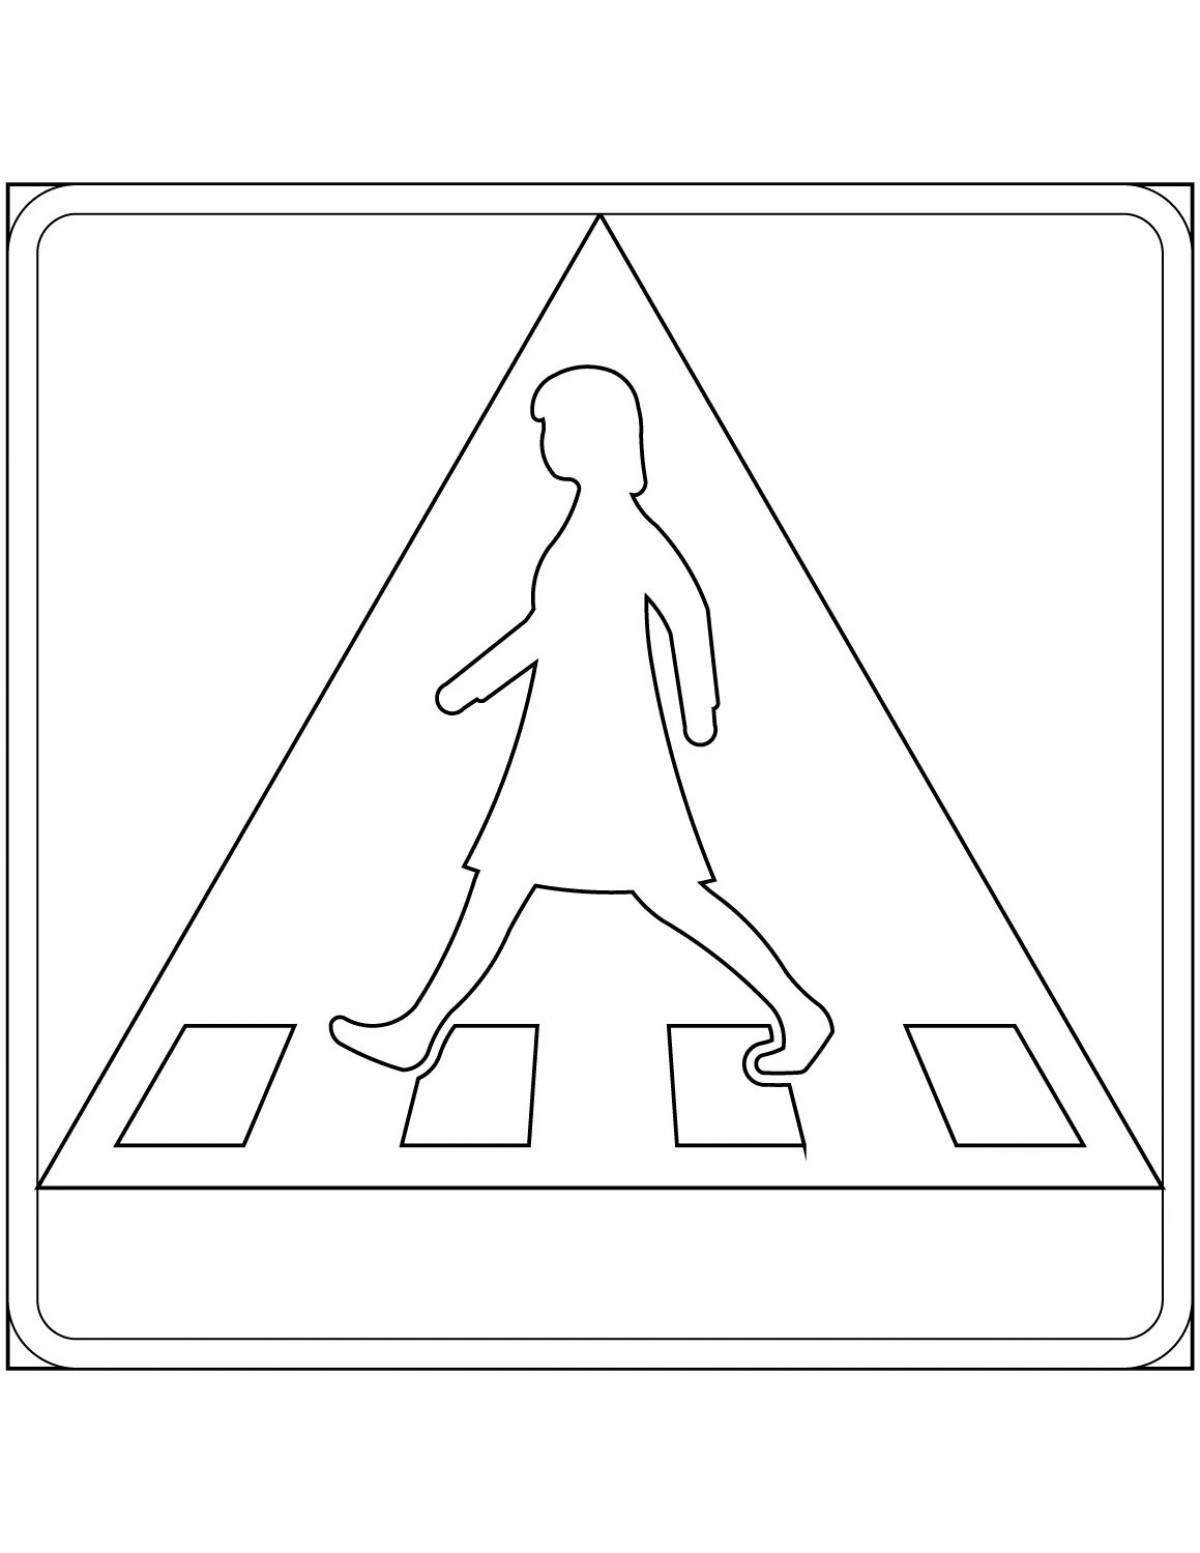 Traffic signs pedestrian crossing for children #7